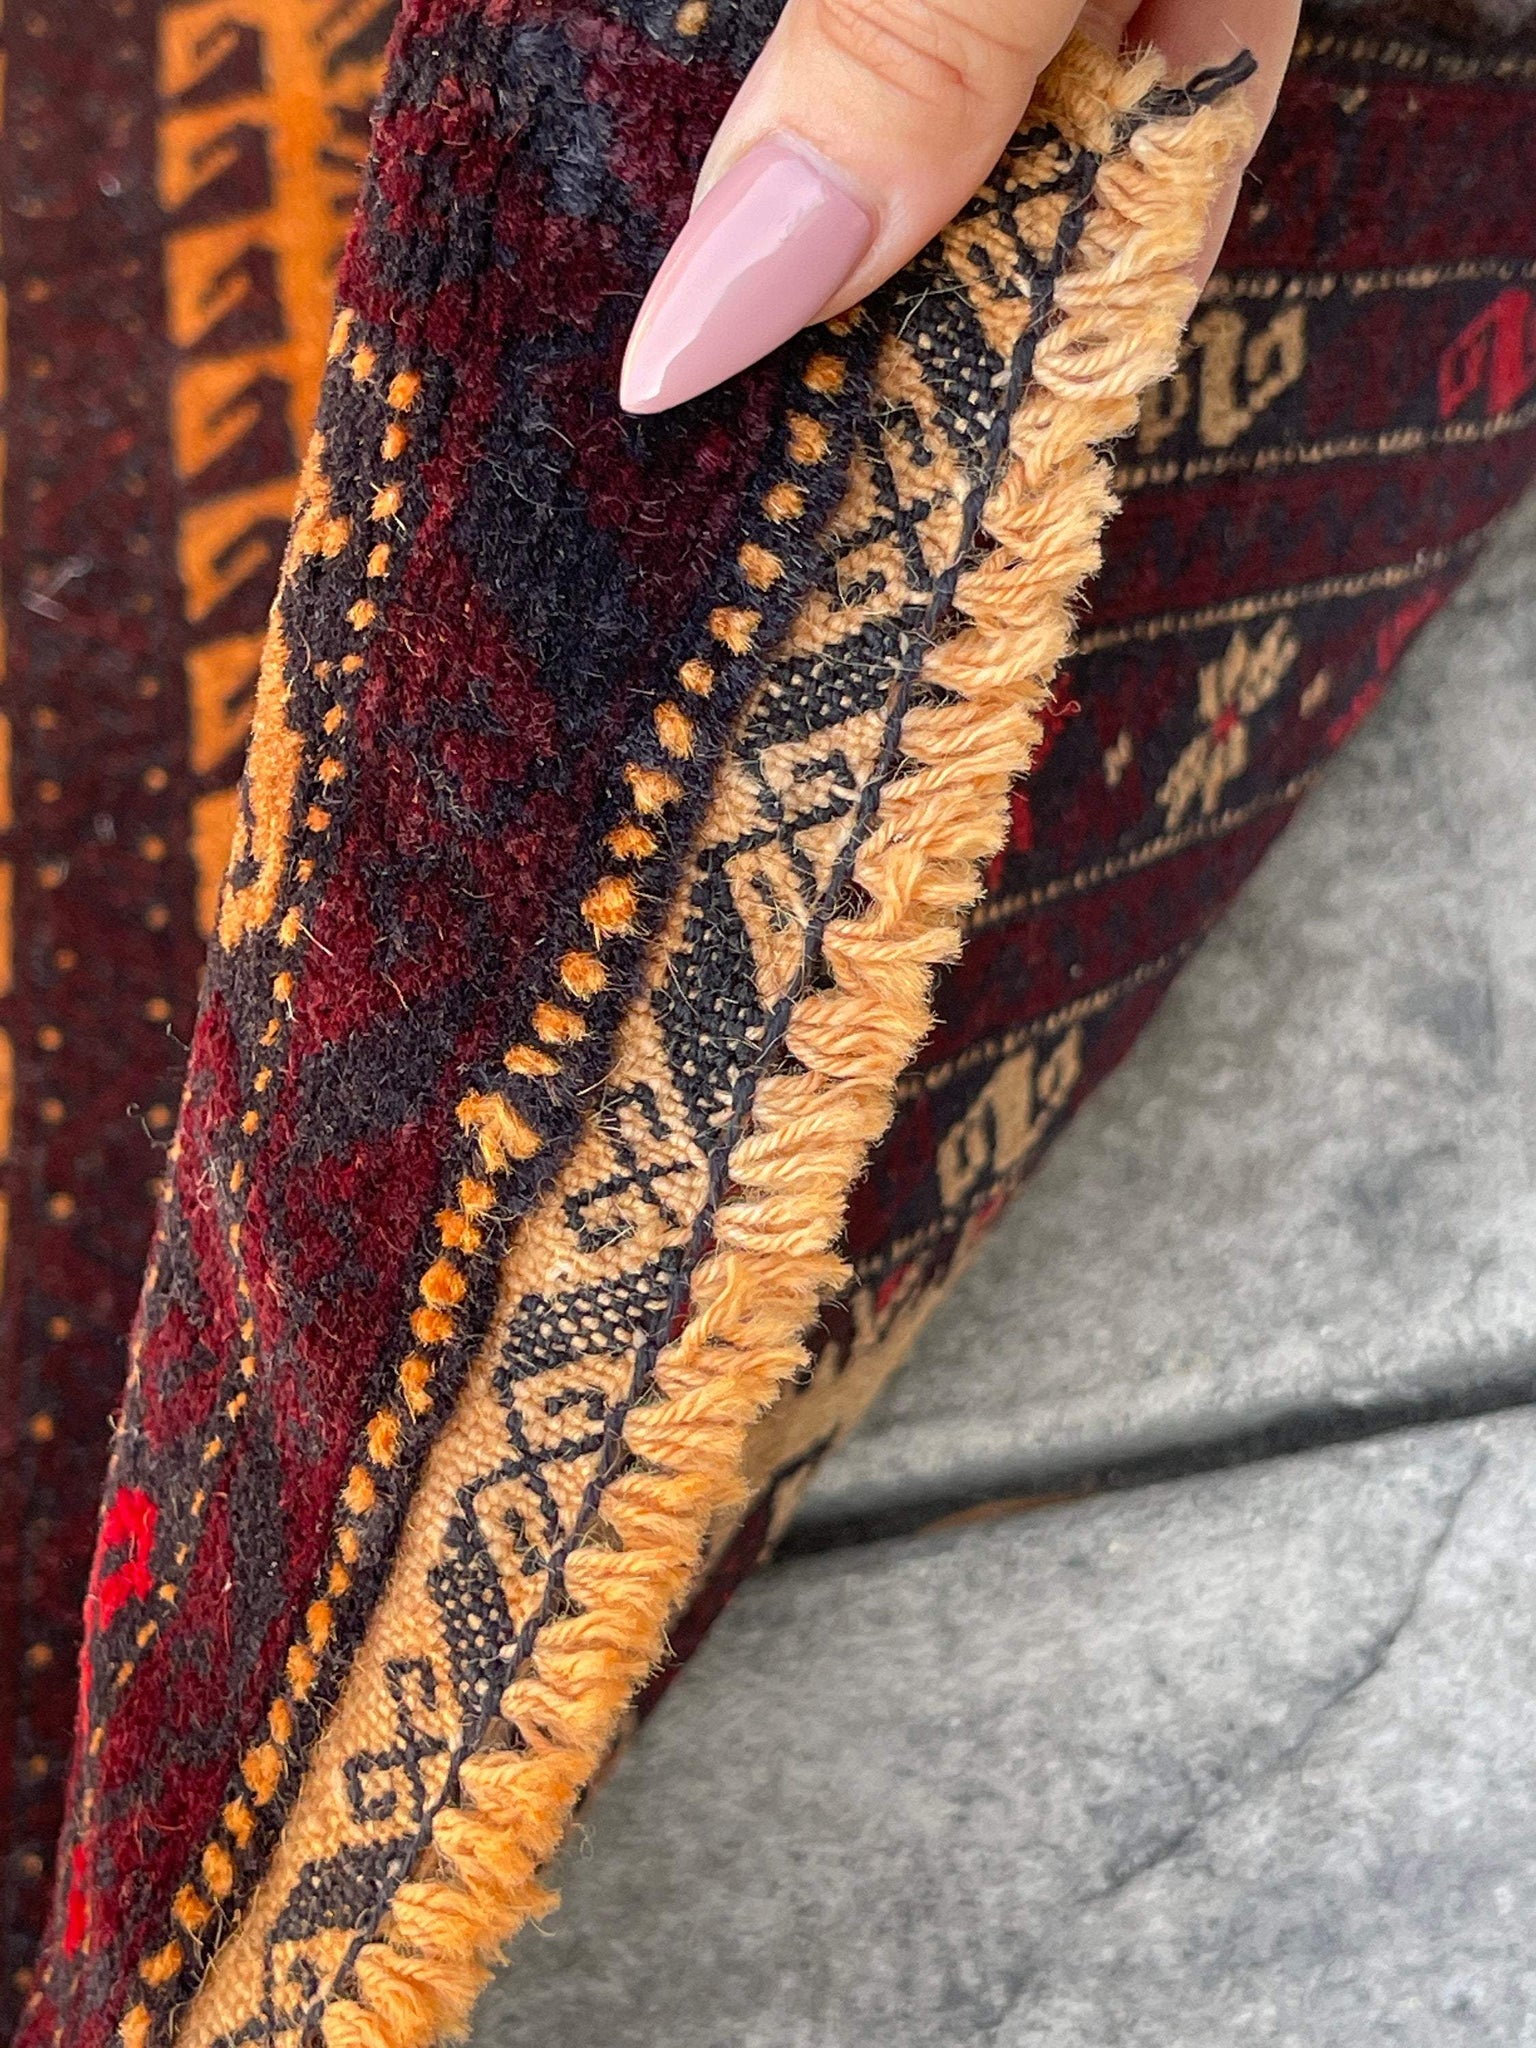 3x5 (90x150) Handmade Vintage Afghan Rug | Maroon Gold Red | Nomadic Baluch Boho Bohemian Tribal Turkish Moroccan Wool